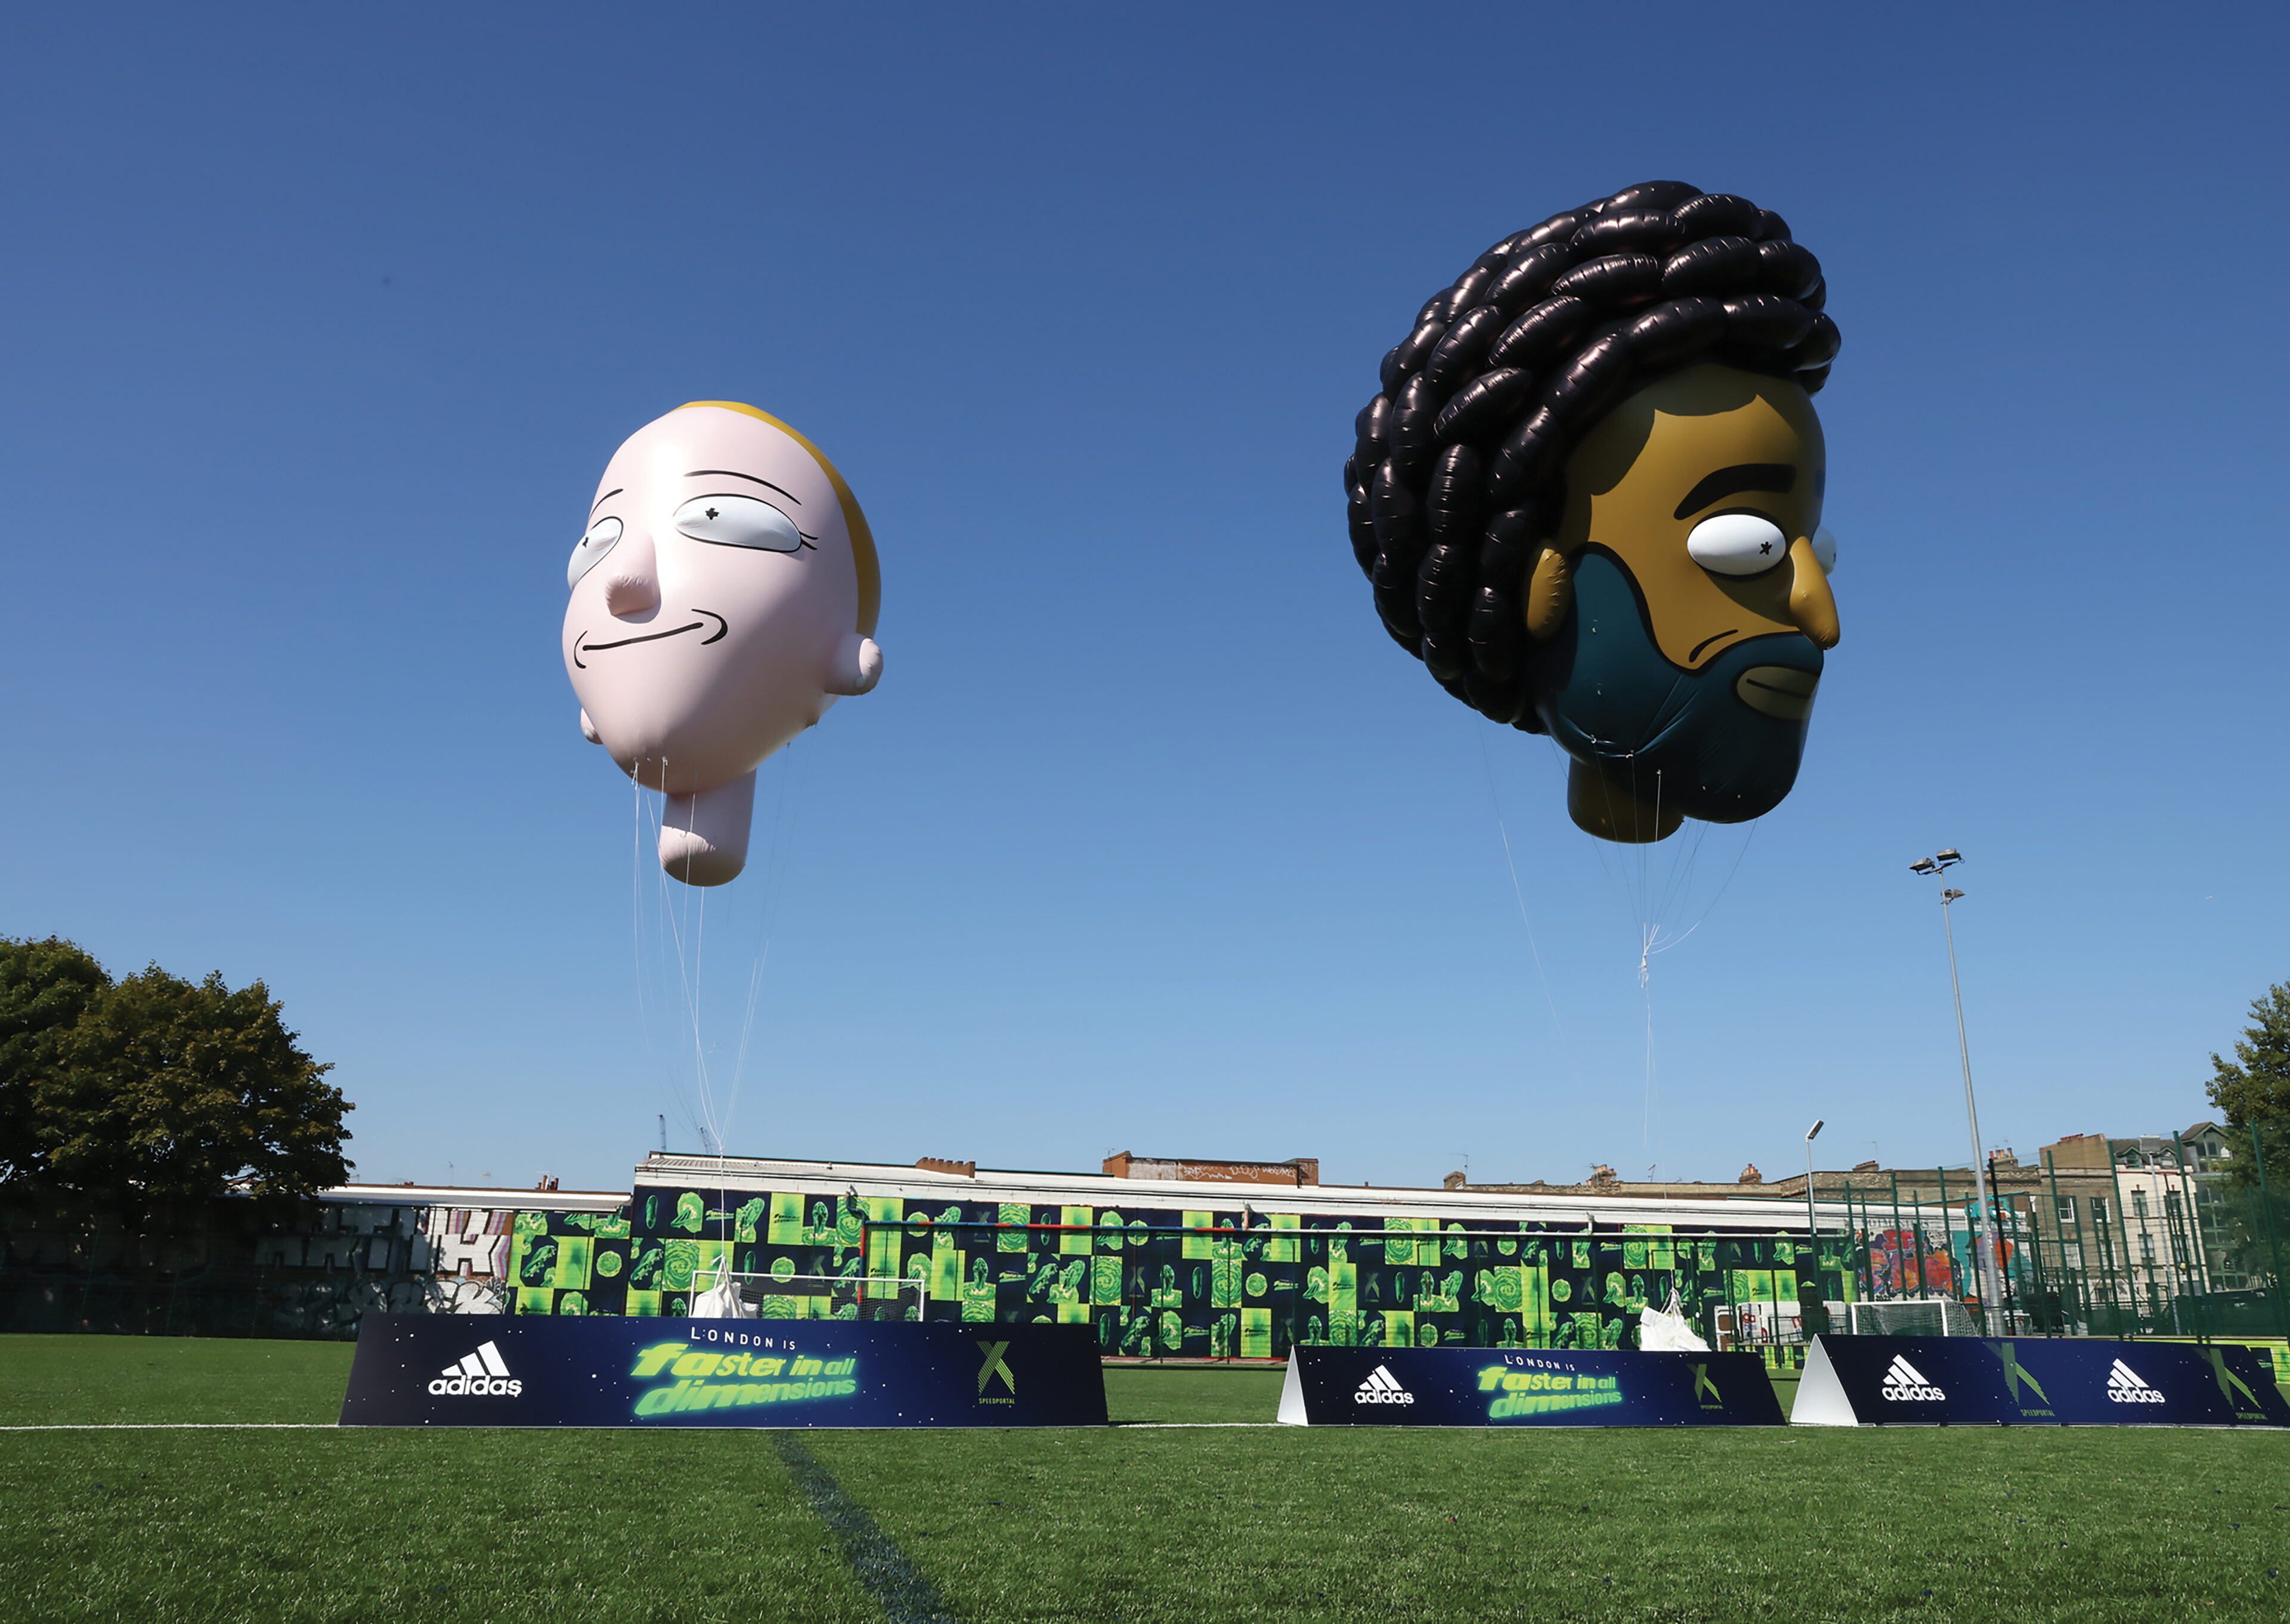 Rick & Morty balloons